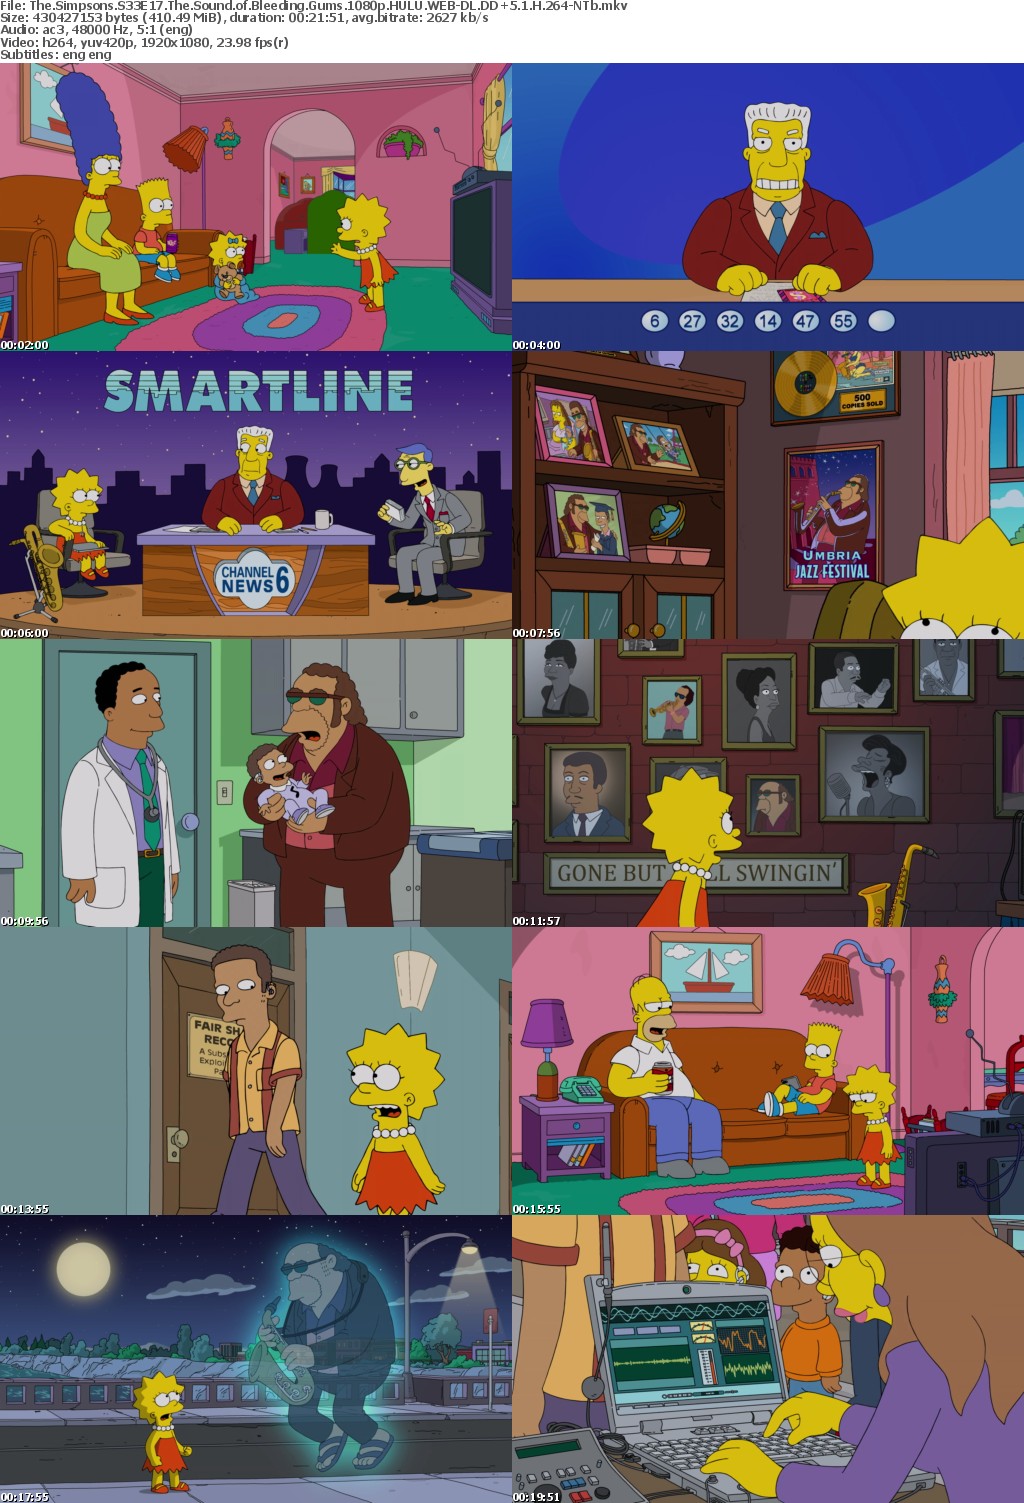 The Simpsons S33E17 The Sound of Bleeding Gums 1080p HULU WEBRip DDP5 1 x264-NTb